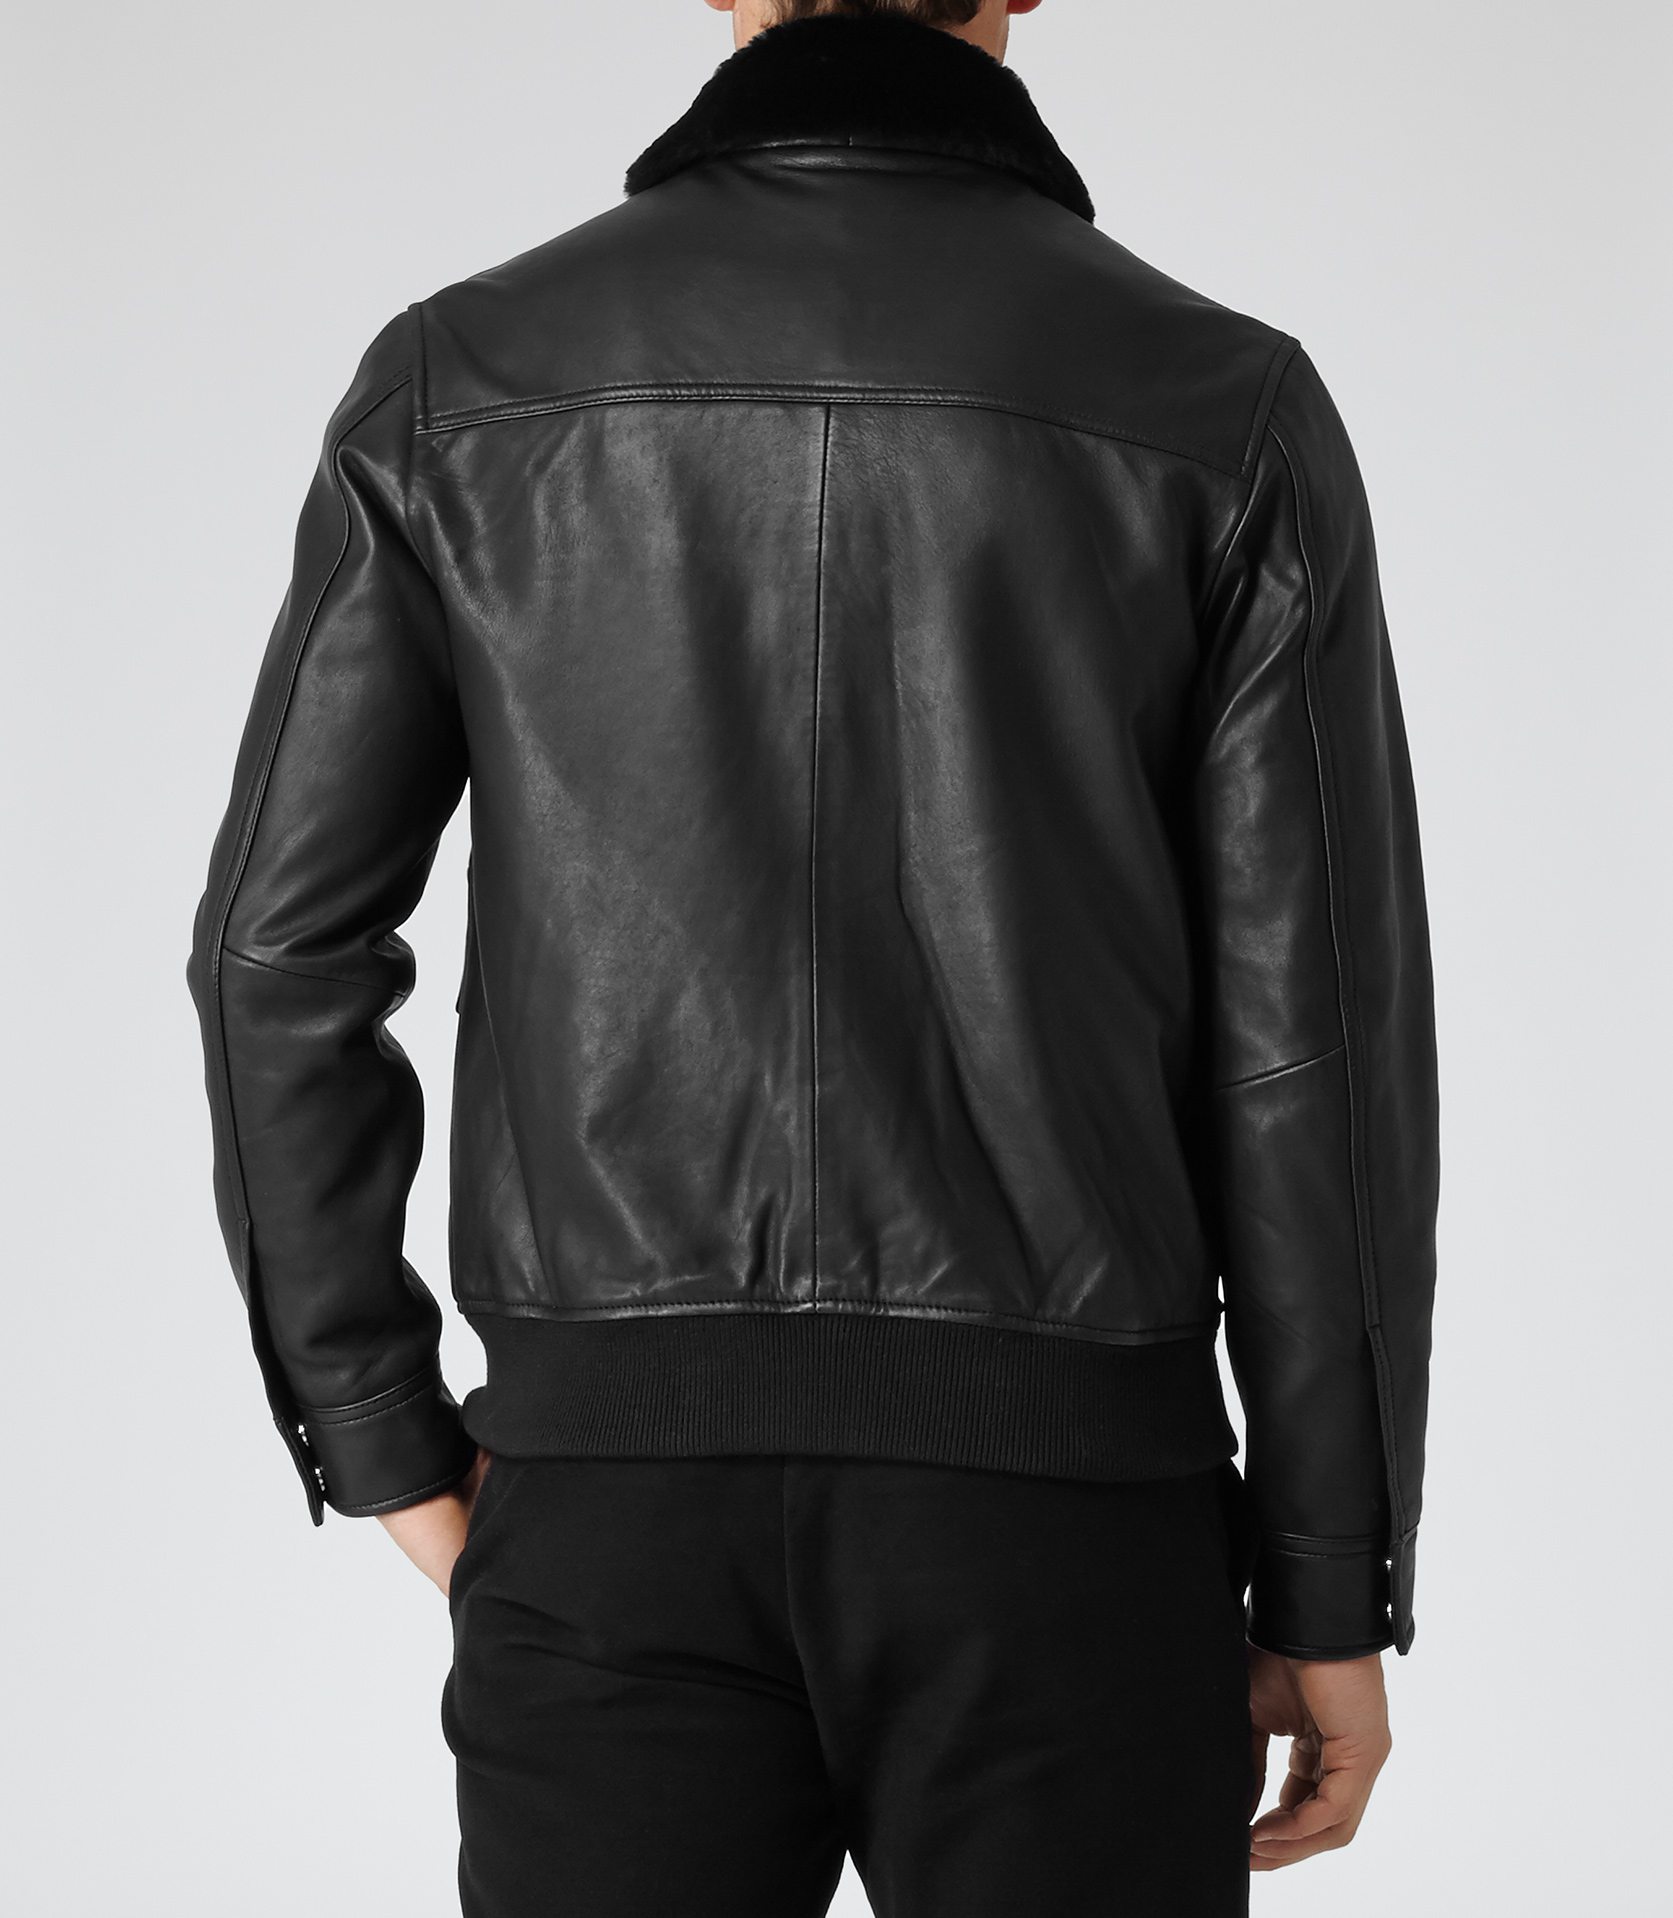 Lyst - Reiss Jake Fur Collar Leather Jacket in Black for Men